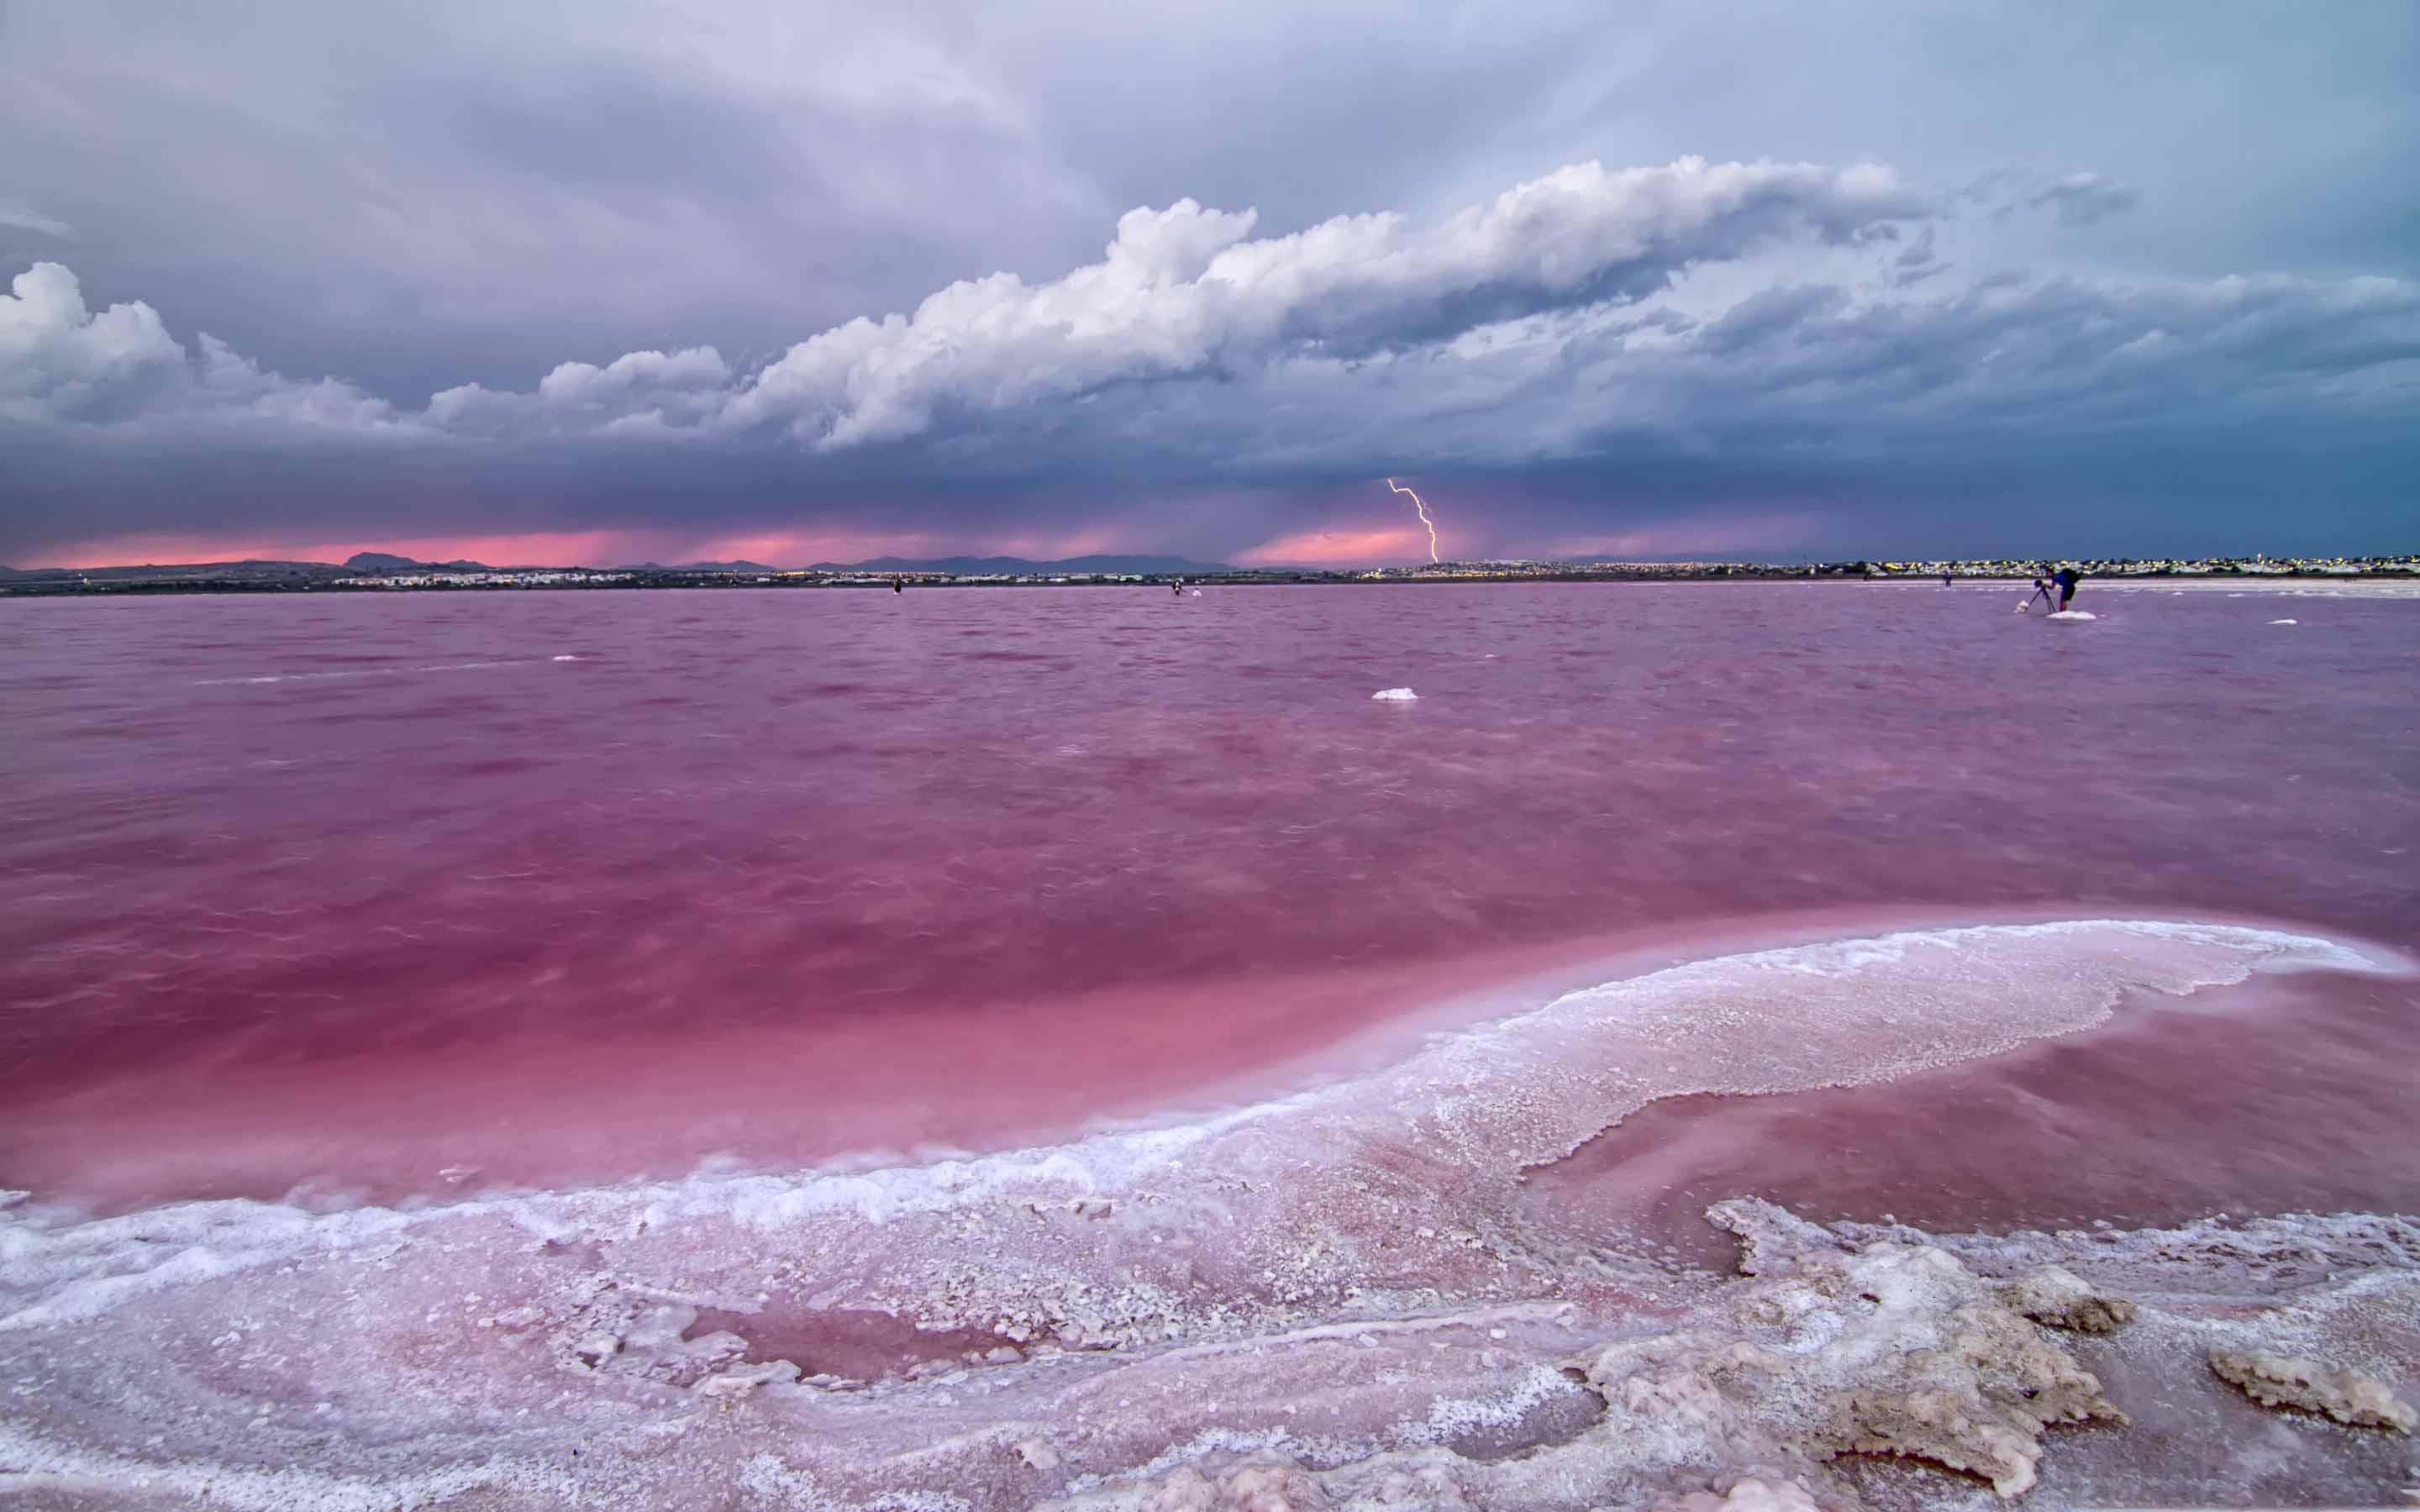 Есть розовое озеро. Озеро Ретба Сенегал. Ретба — розовое озеро в Сенегале.. Розовое озеро Хиллер Австралия. Озеро Хиллер (остров Миддл).